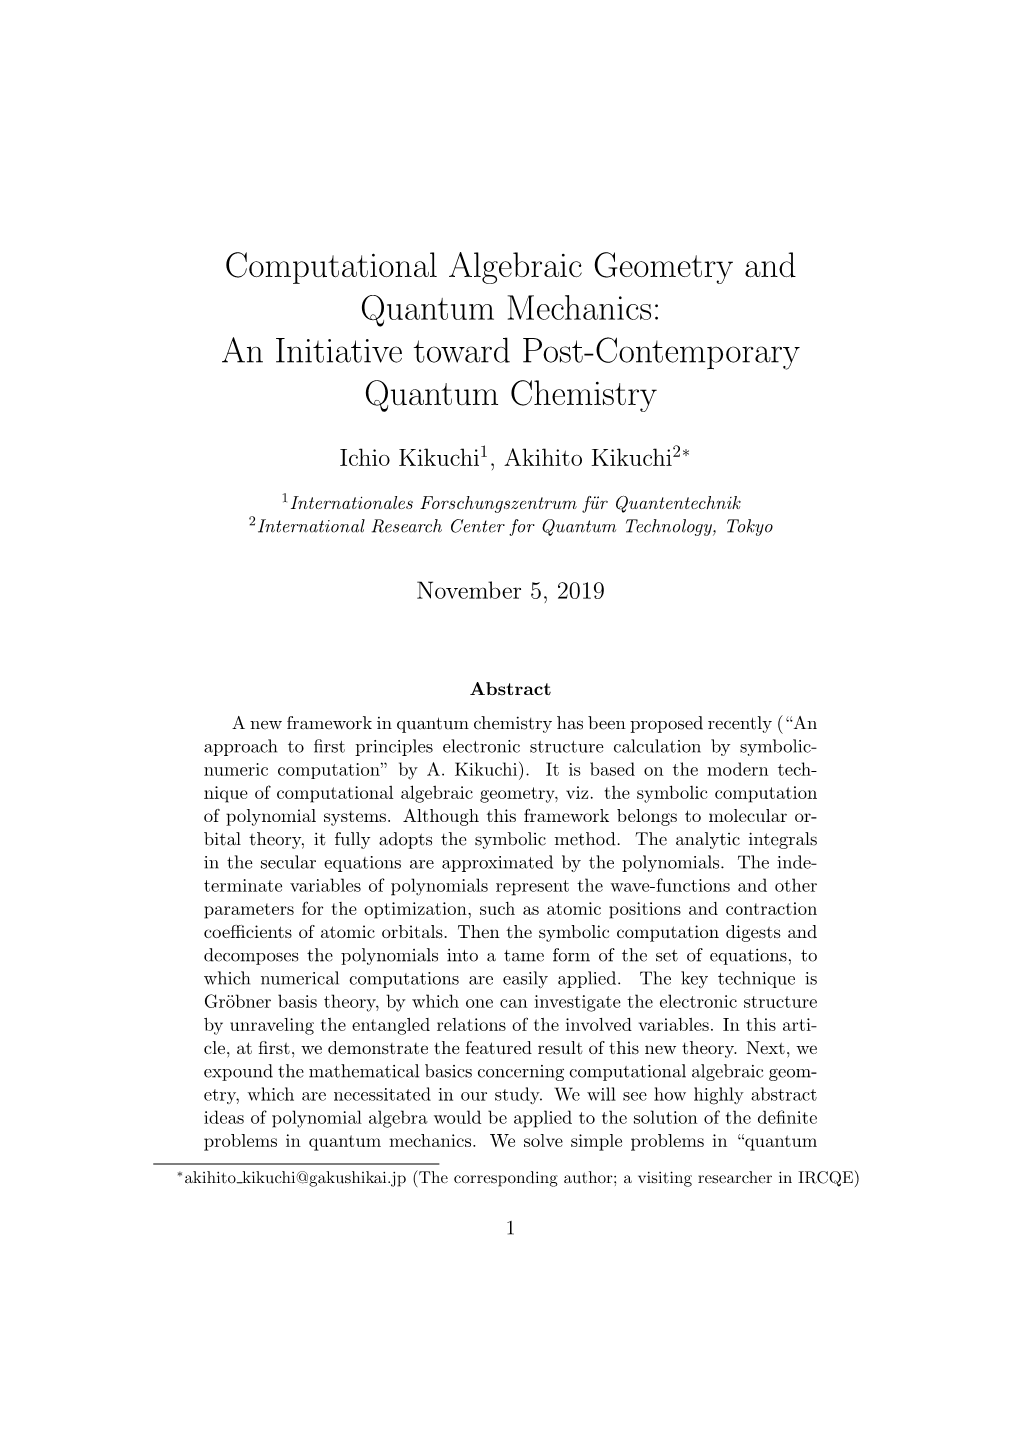 Computational Algebraic Geometry and Quantum Mechanics: an Initiative Toward Post-Contemporary Quantum Chemistry